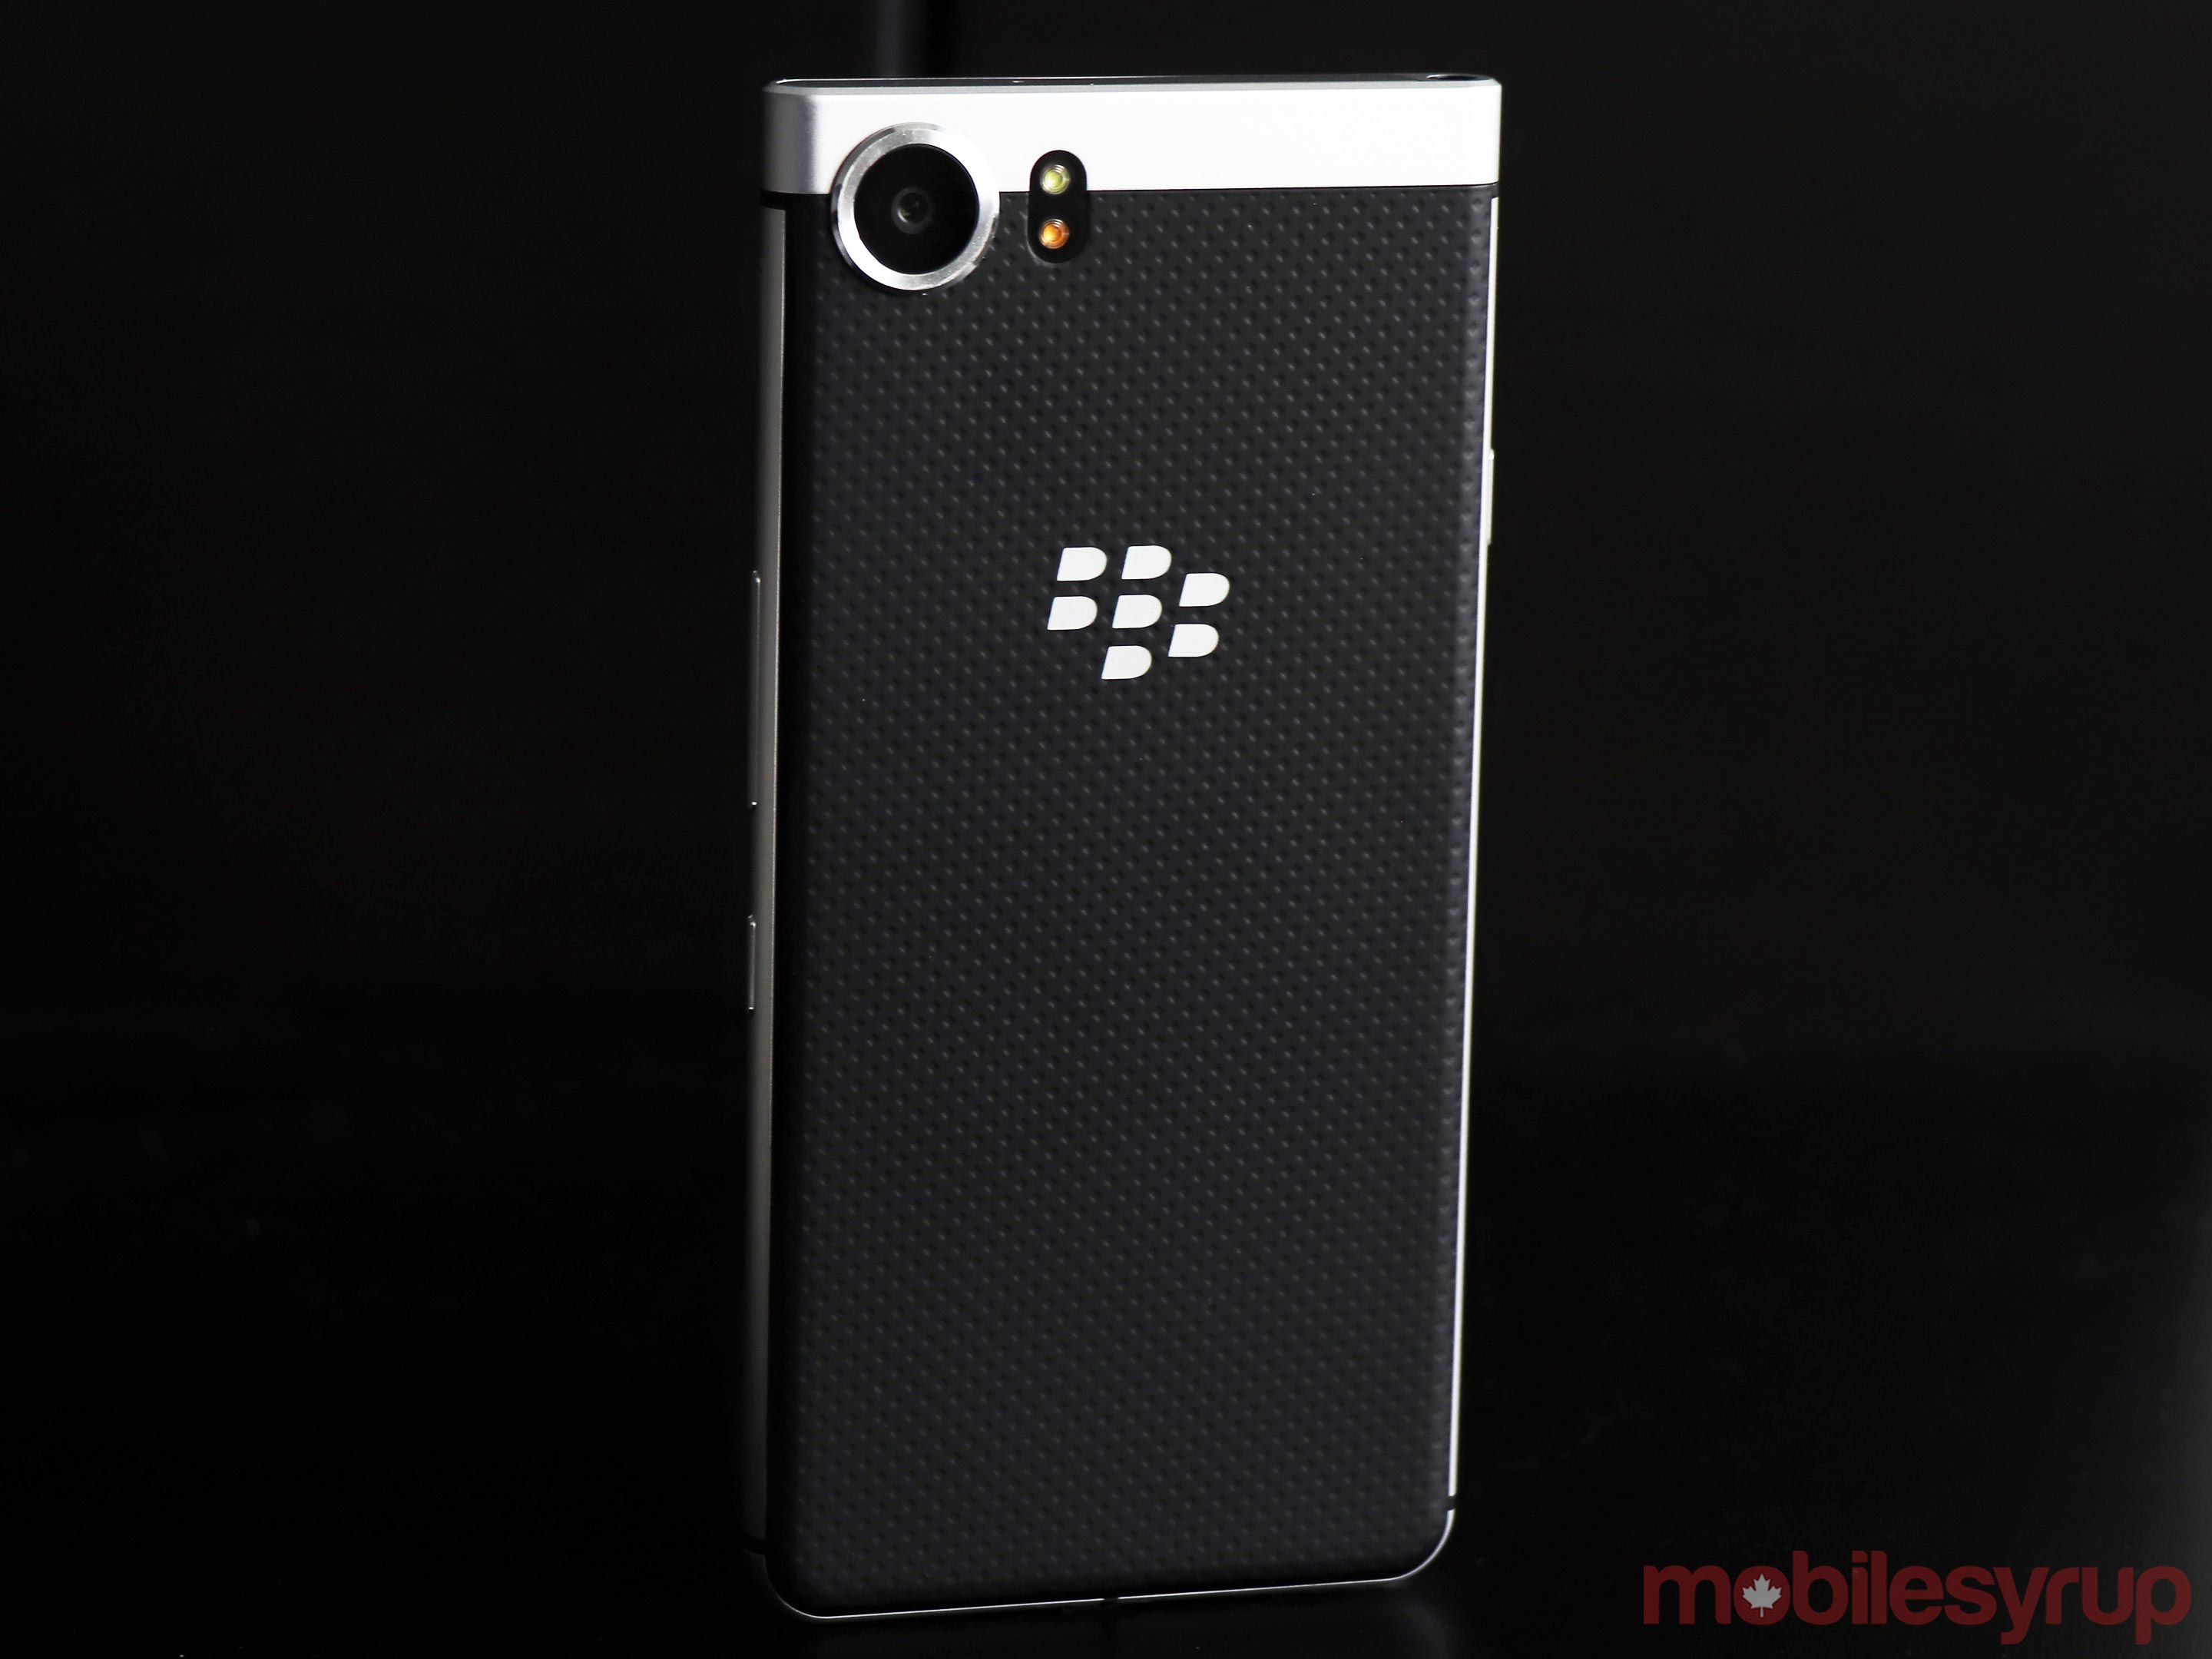 Blackberry keyone back